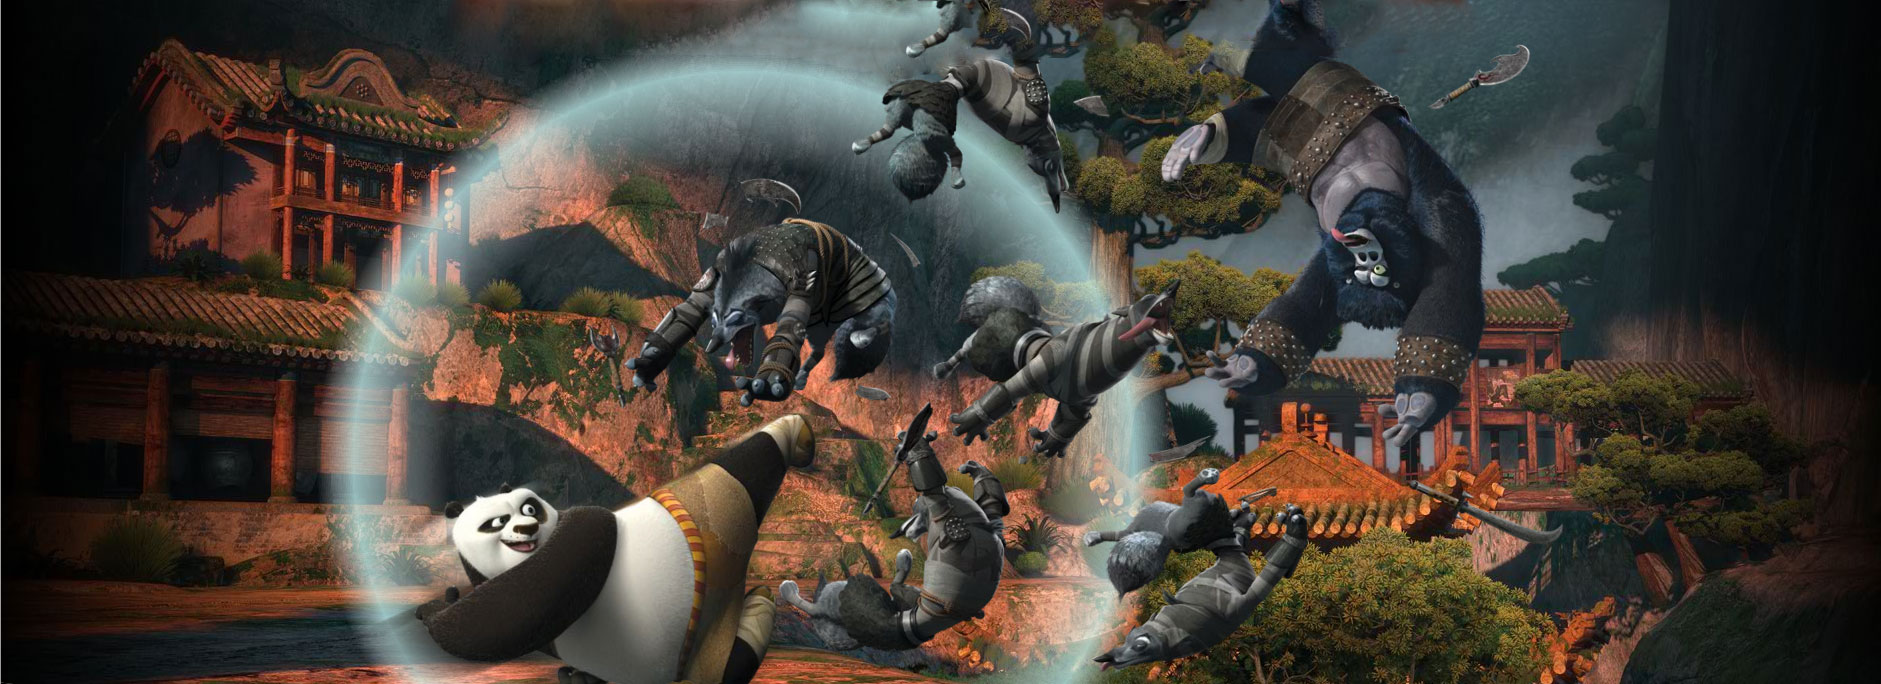 Kung Fu Panda 2 - HD Wallpaper 